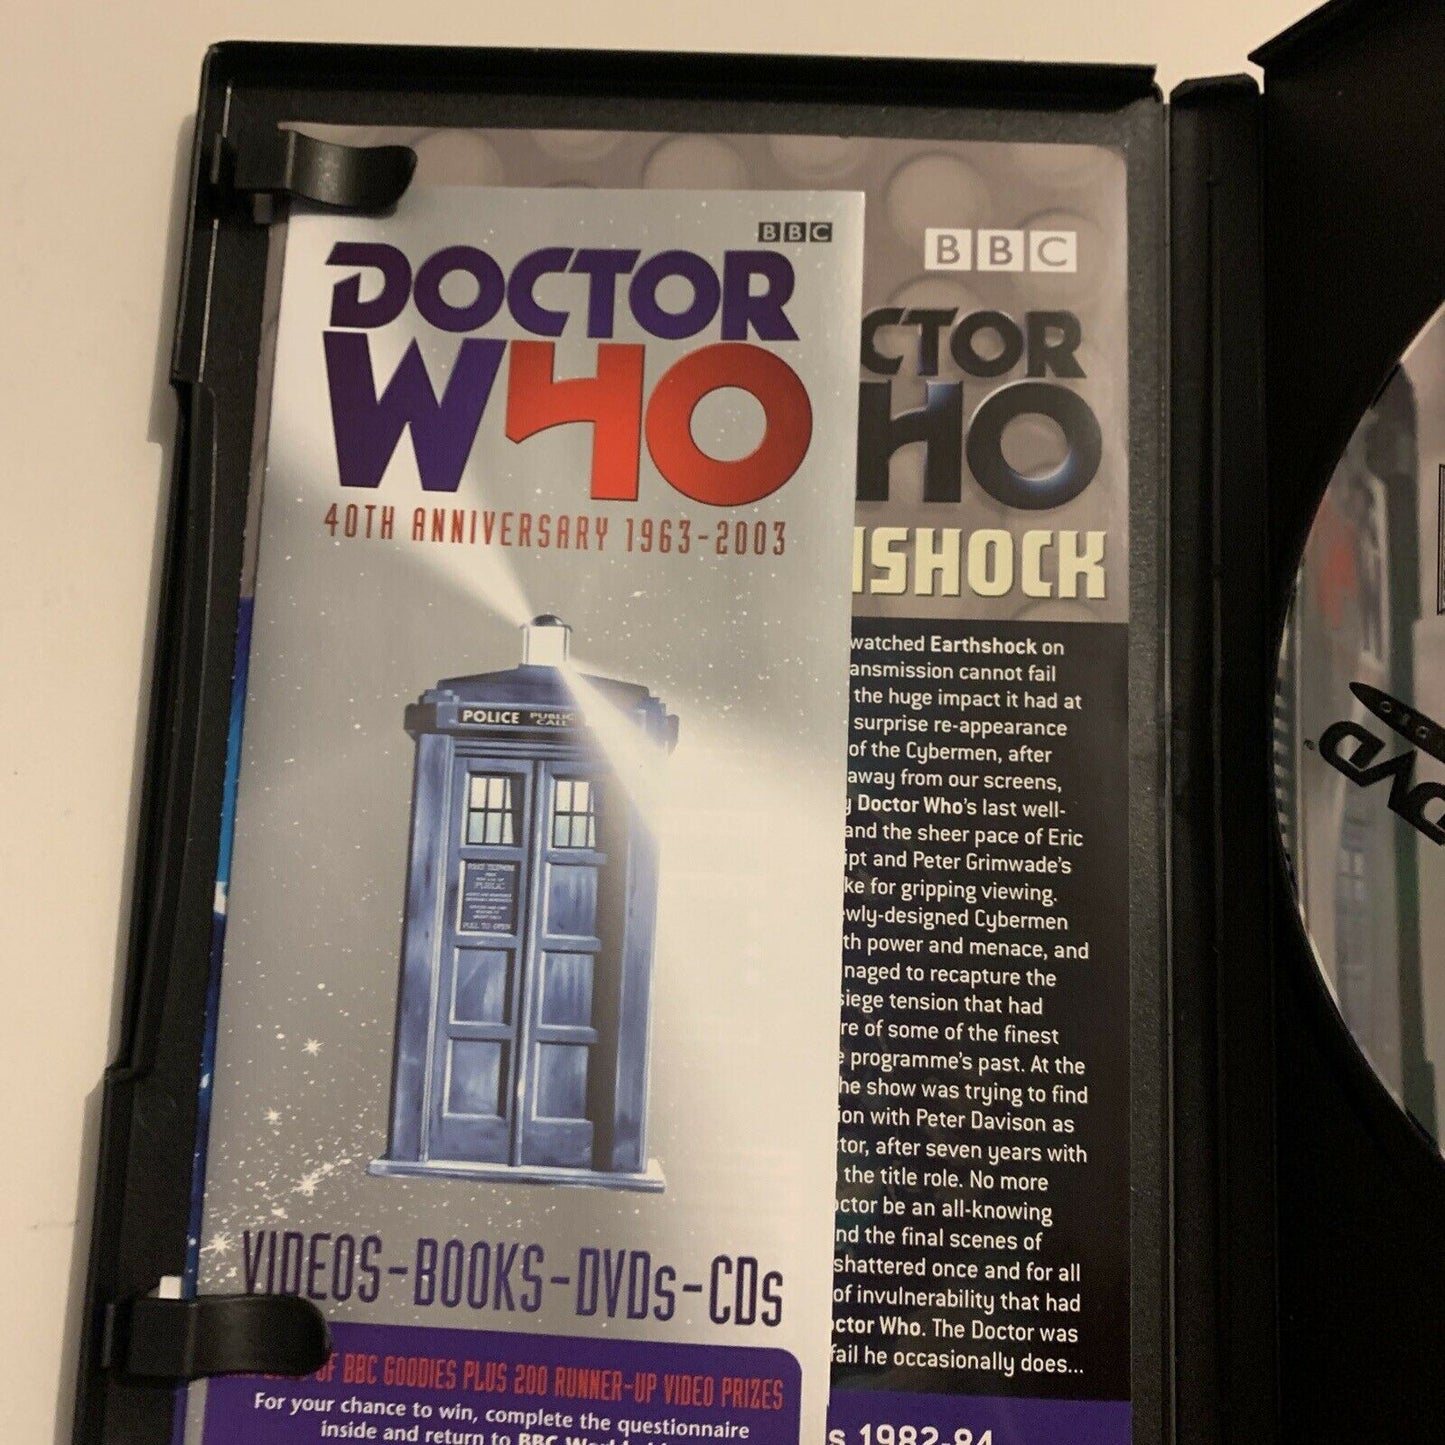 Doctor Who - Earthshock (DVD, 1982) Peter Davison BBC Region 4&2